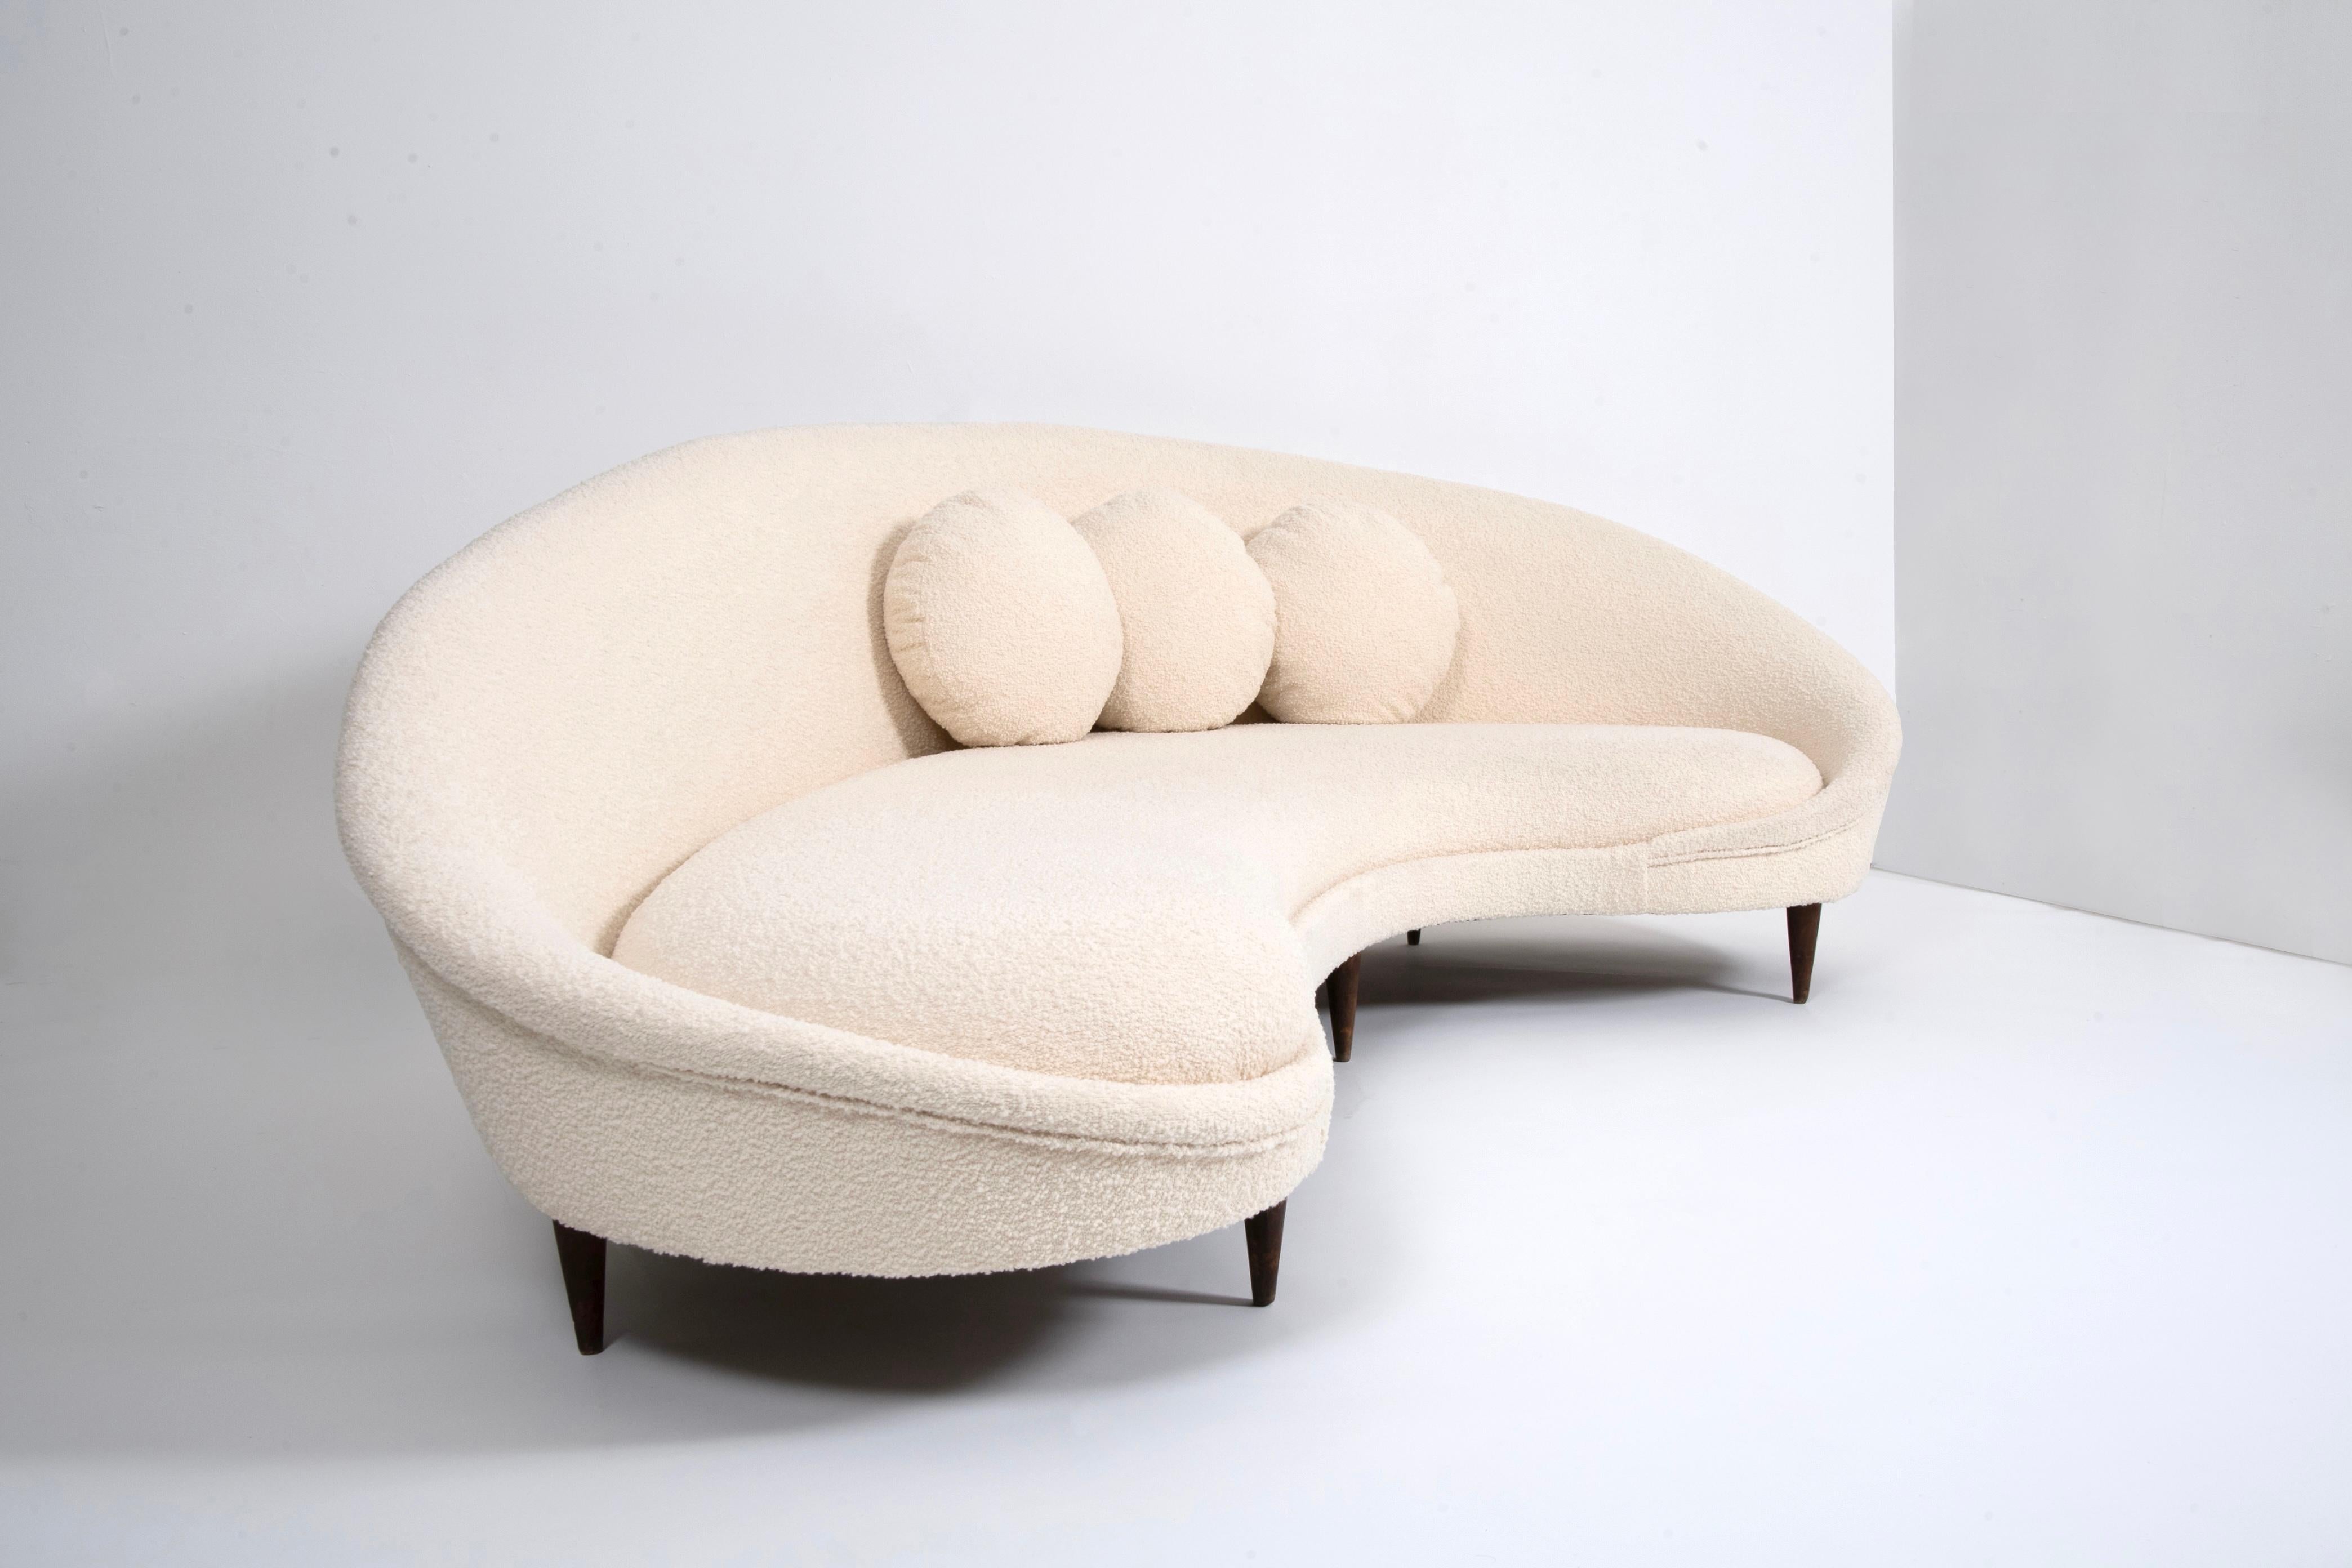 Italian 20th Century Federico Munari Curved Lounge Sofa, Italy, 1955 For Sale